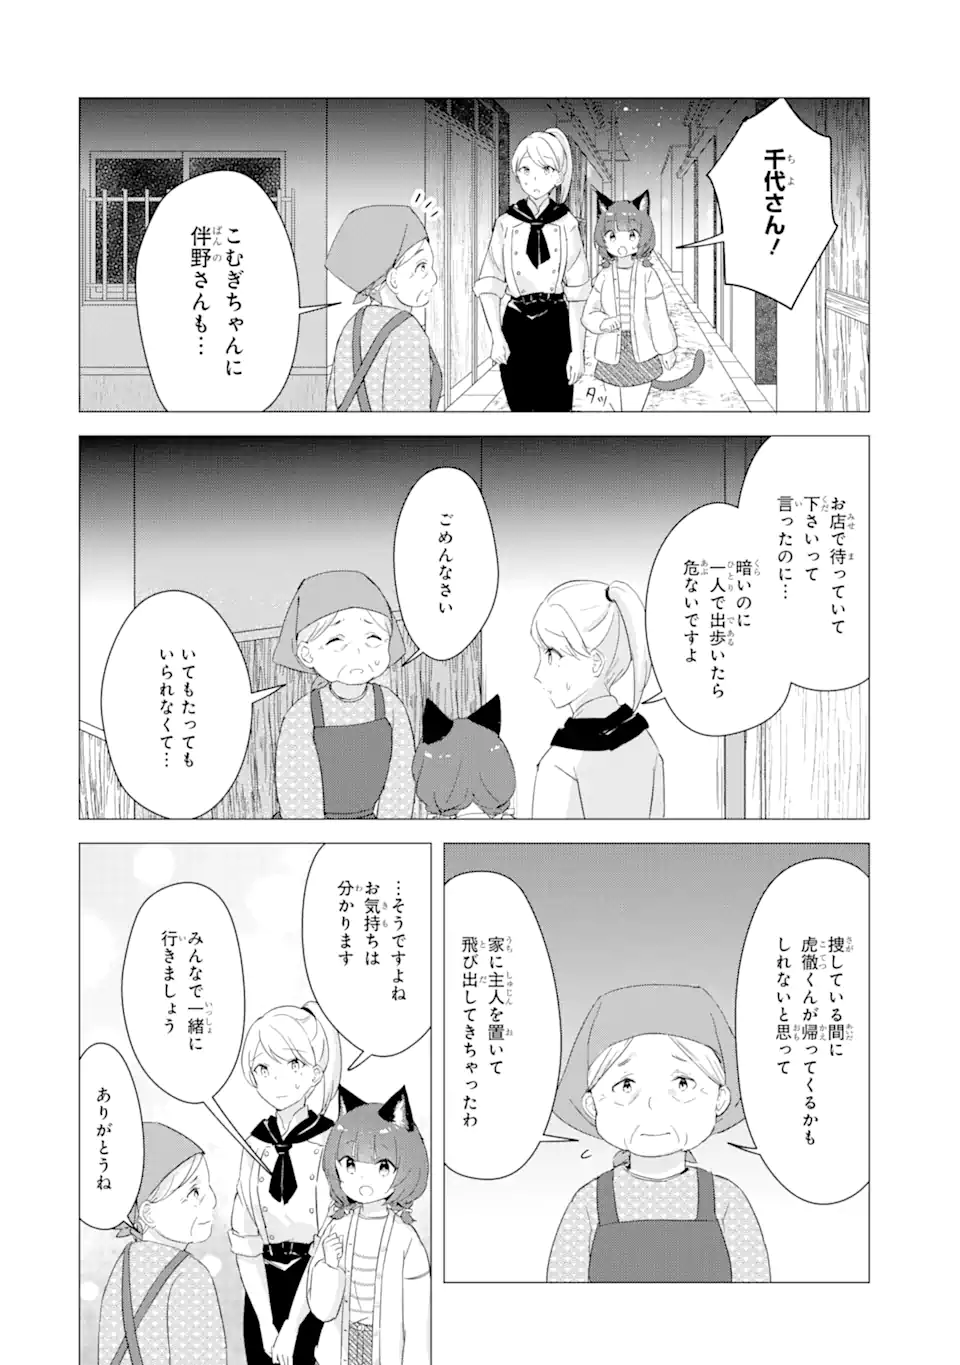 Komugi ga Jiman no Panya-san - Chapter 12 - Page 6